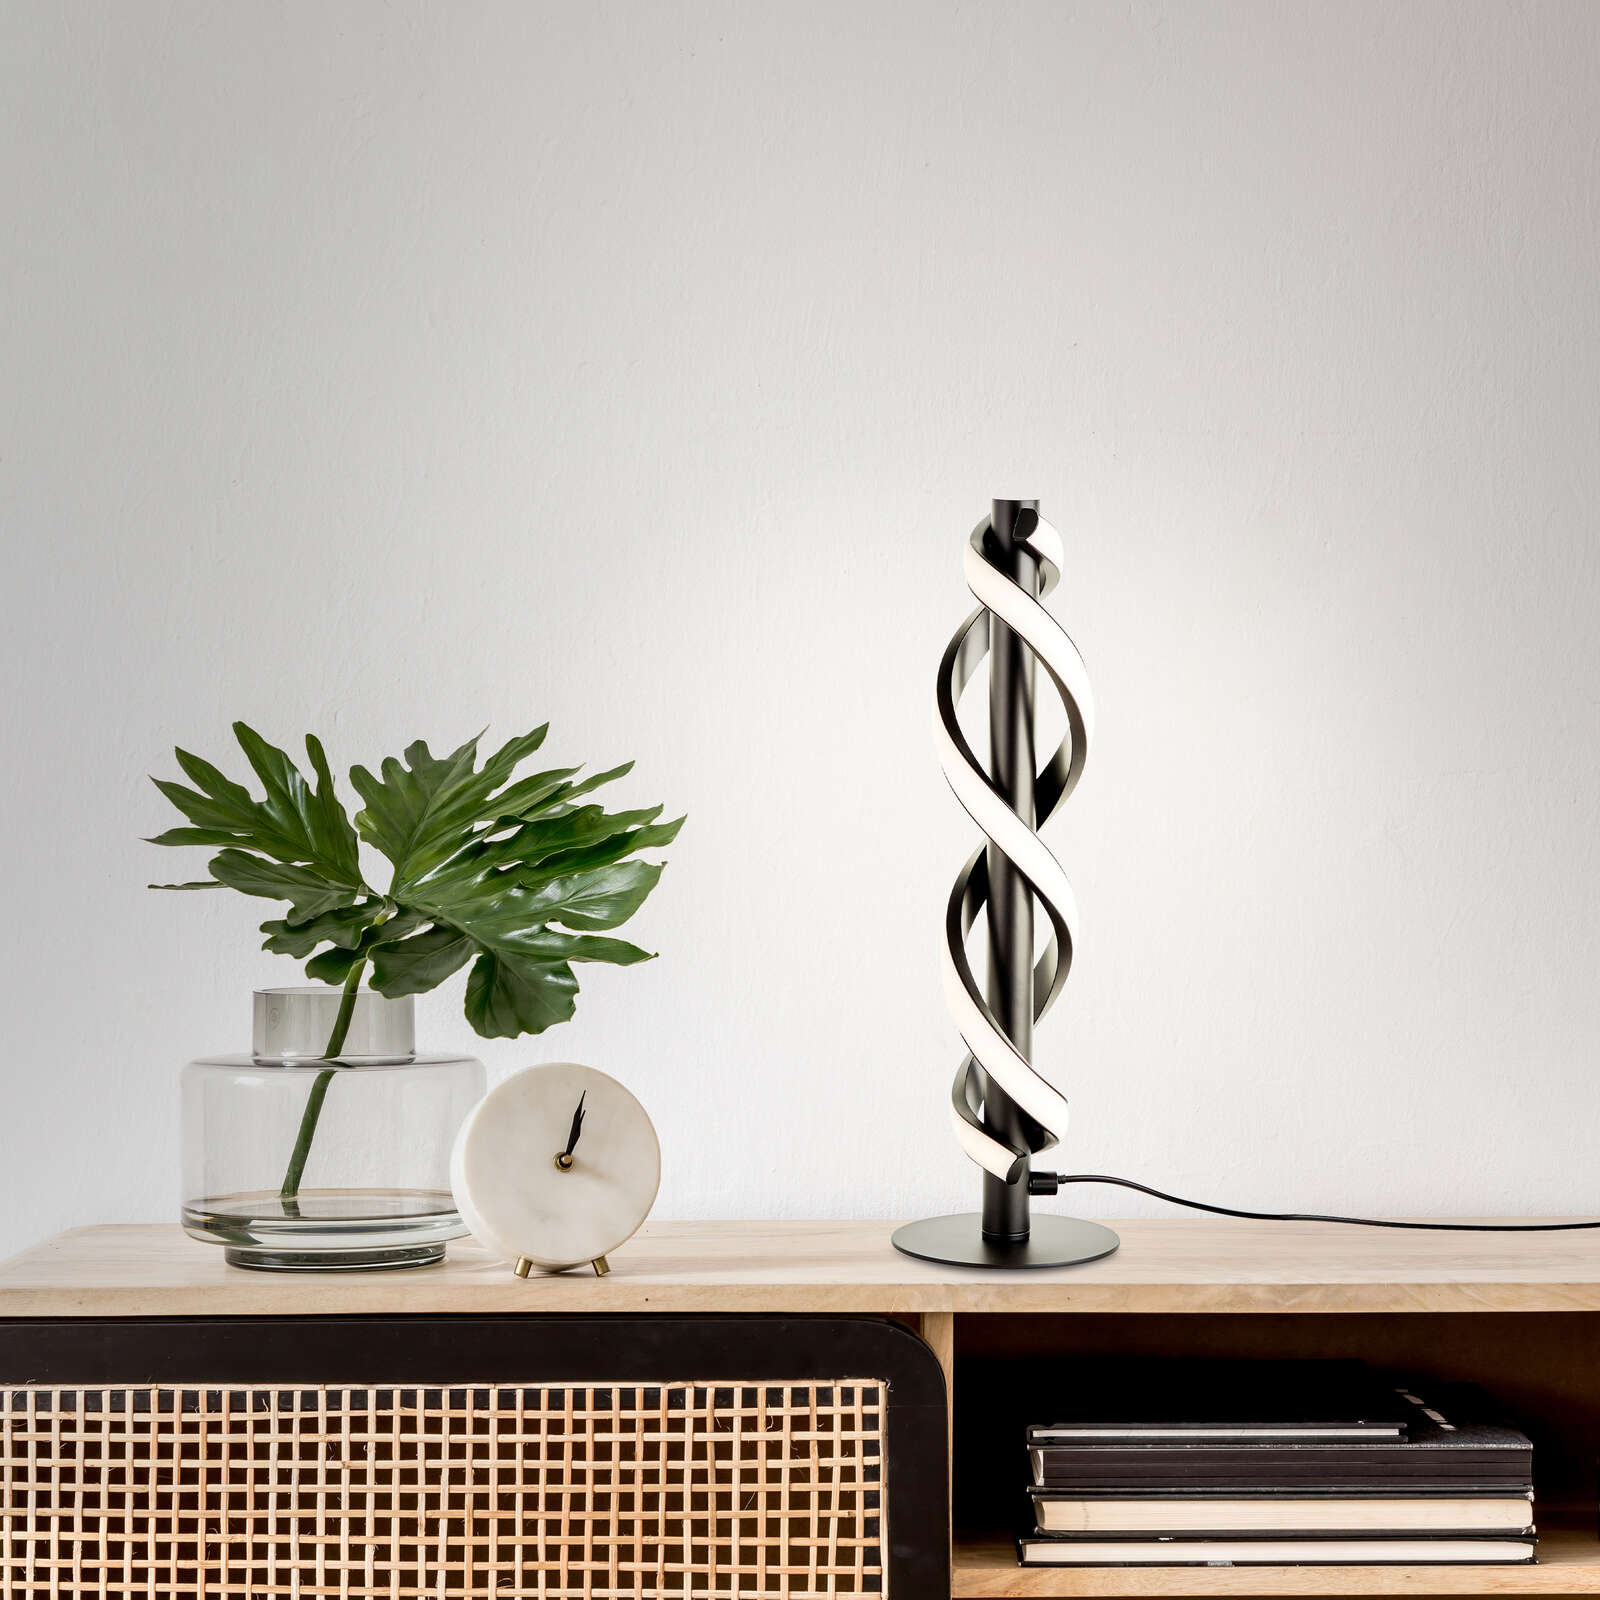             Plastic table lamp - Alexander 1 - Black
        